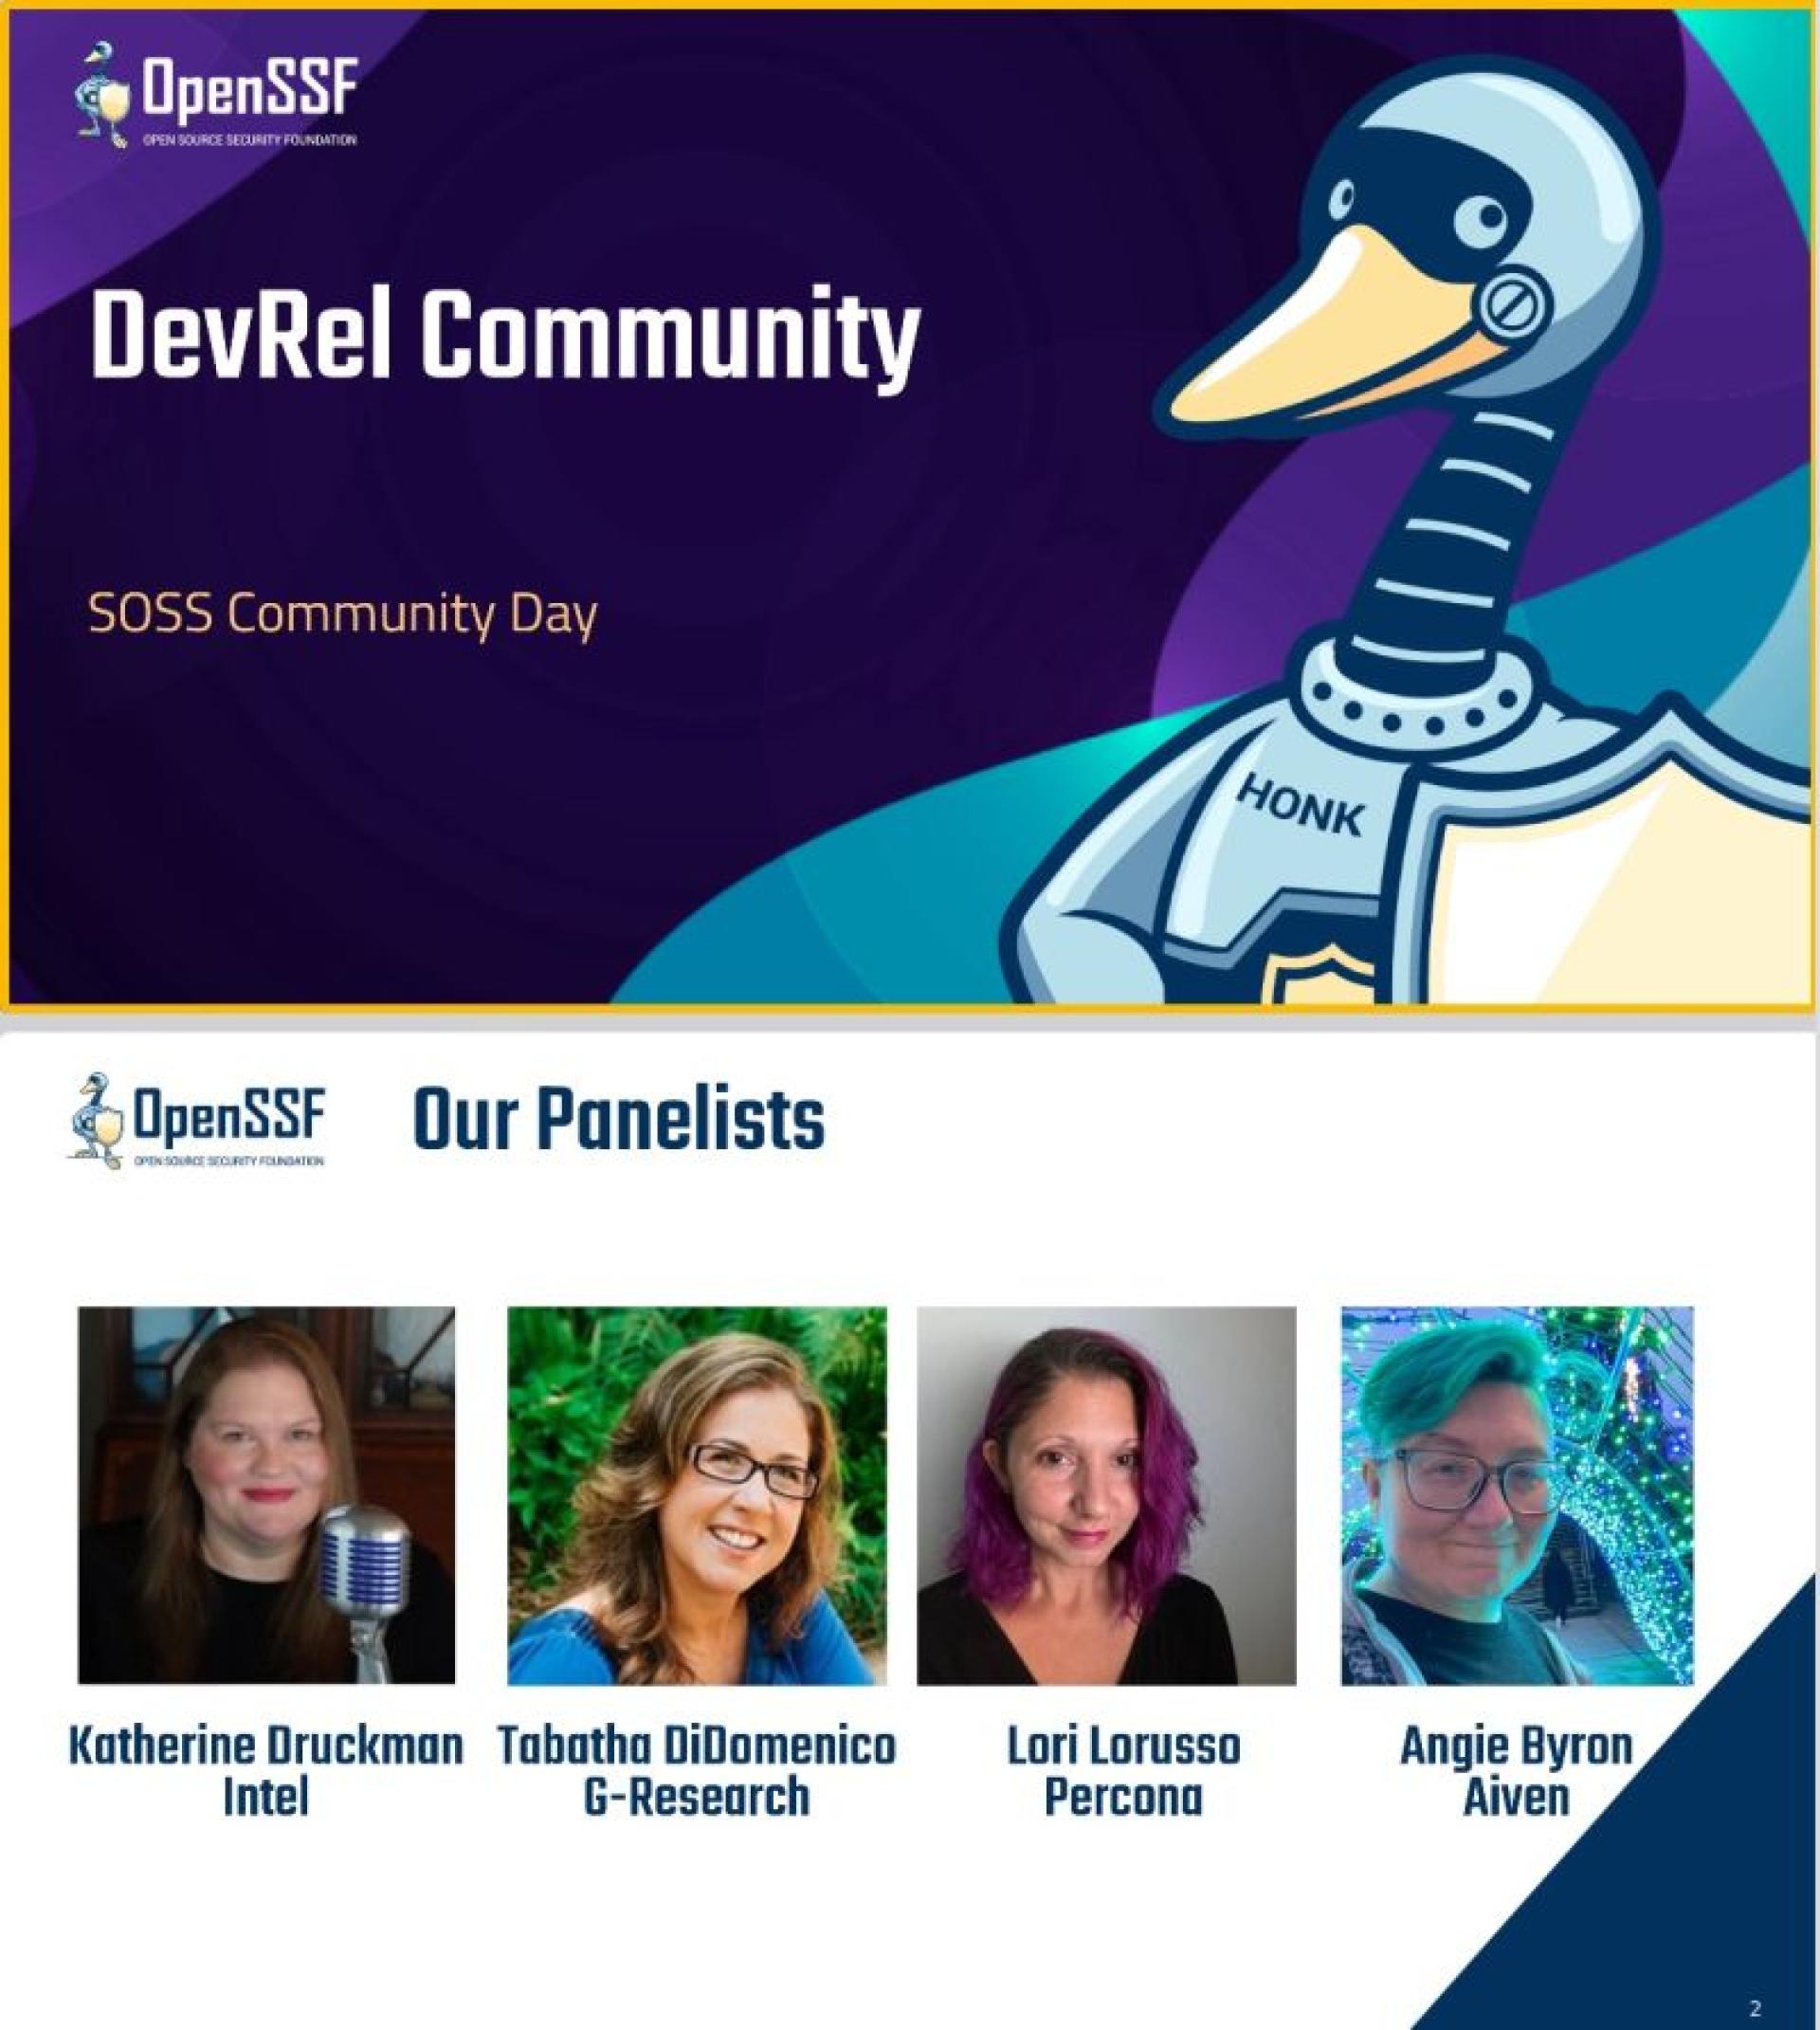 DevRel Community Panelists